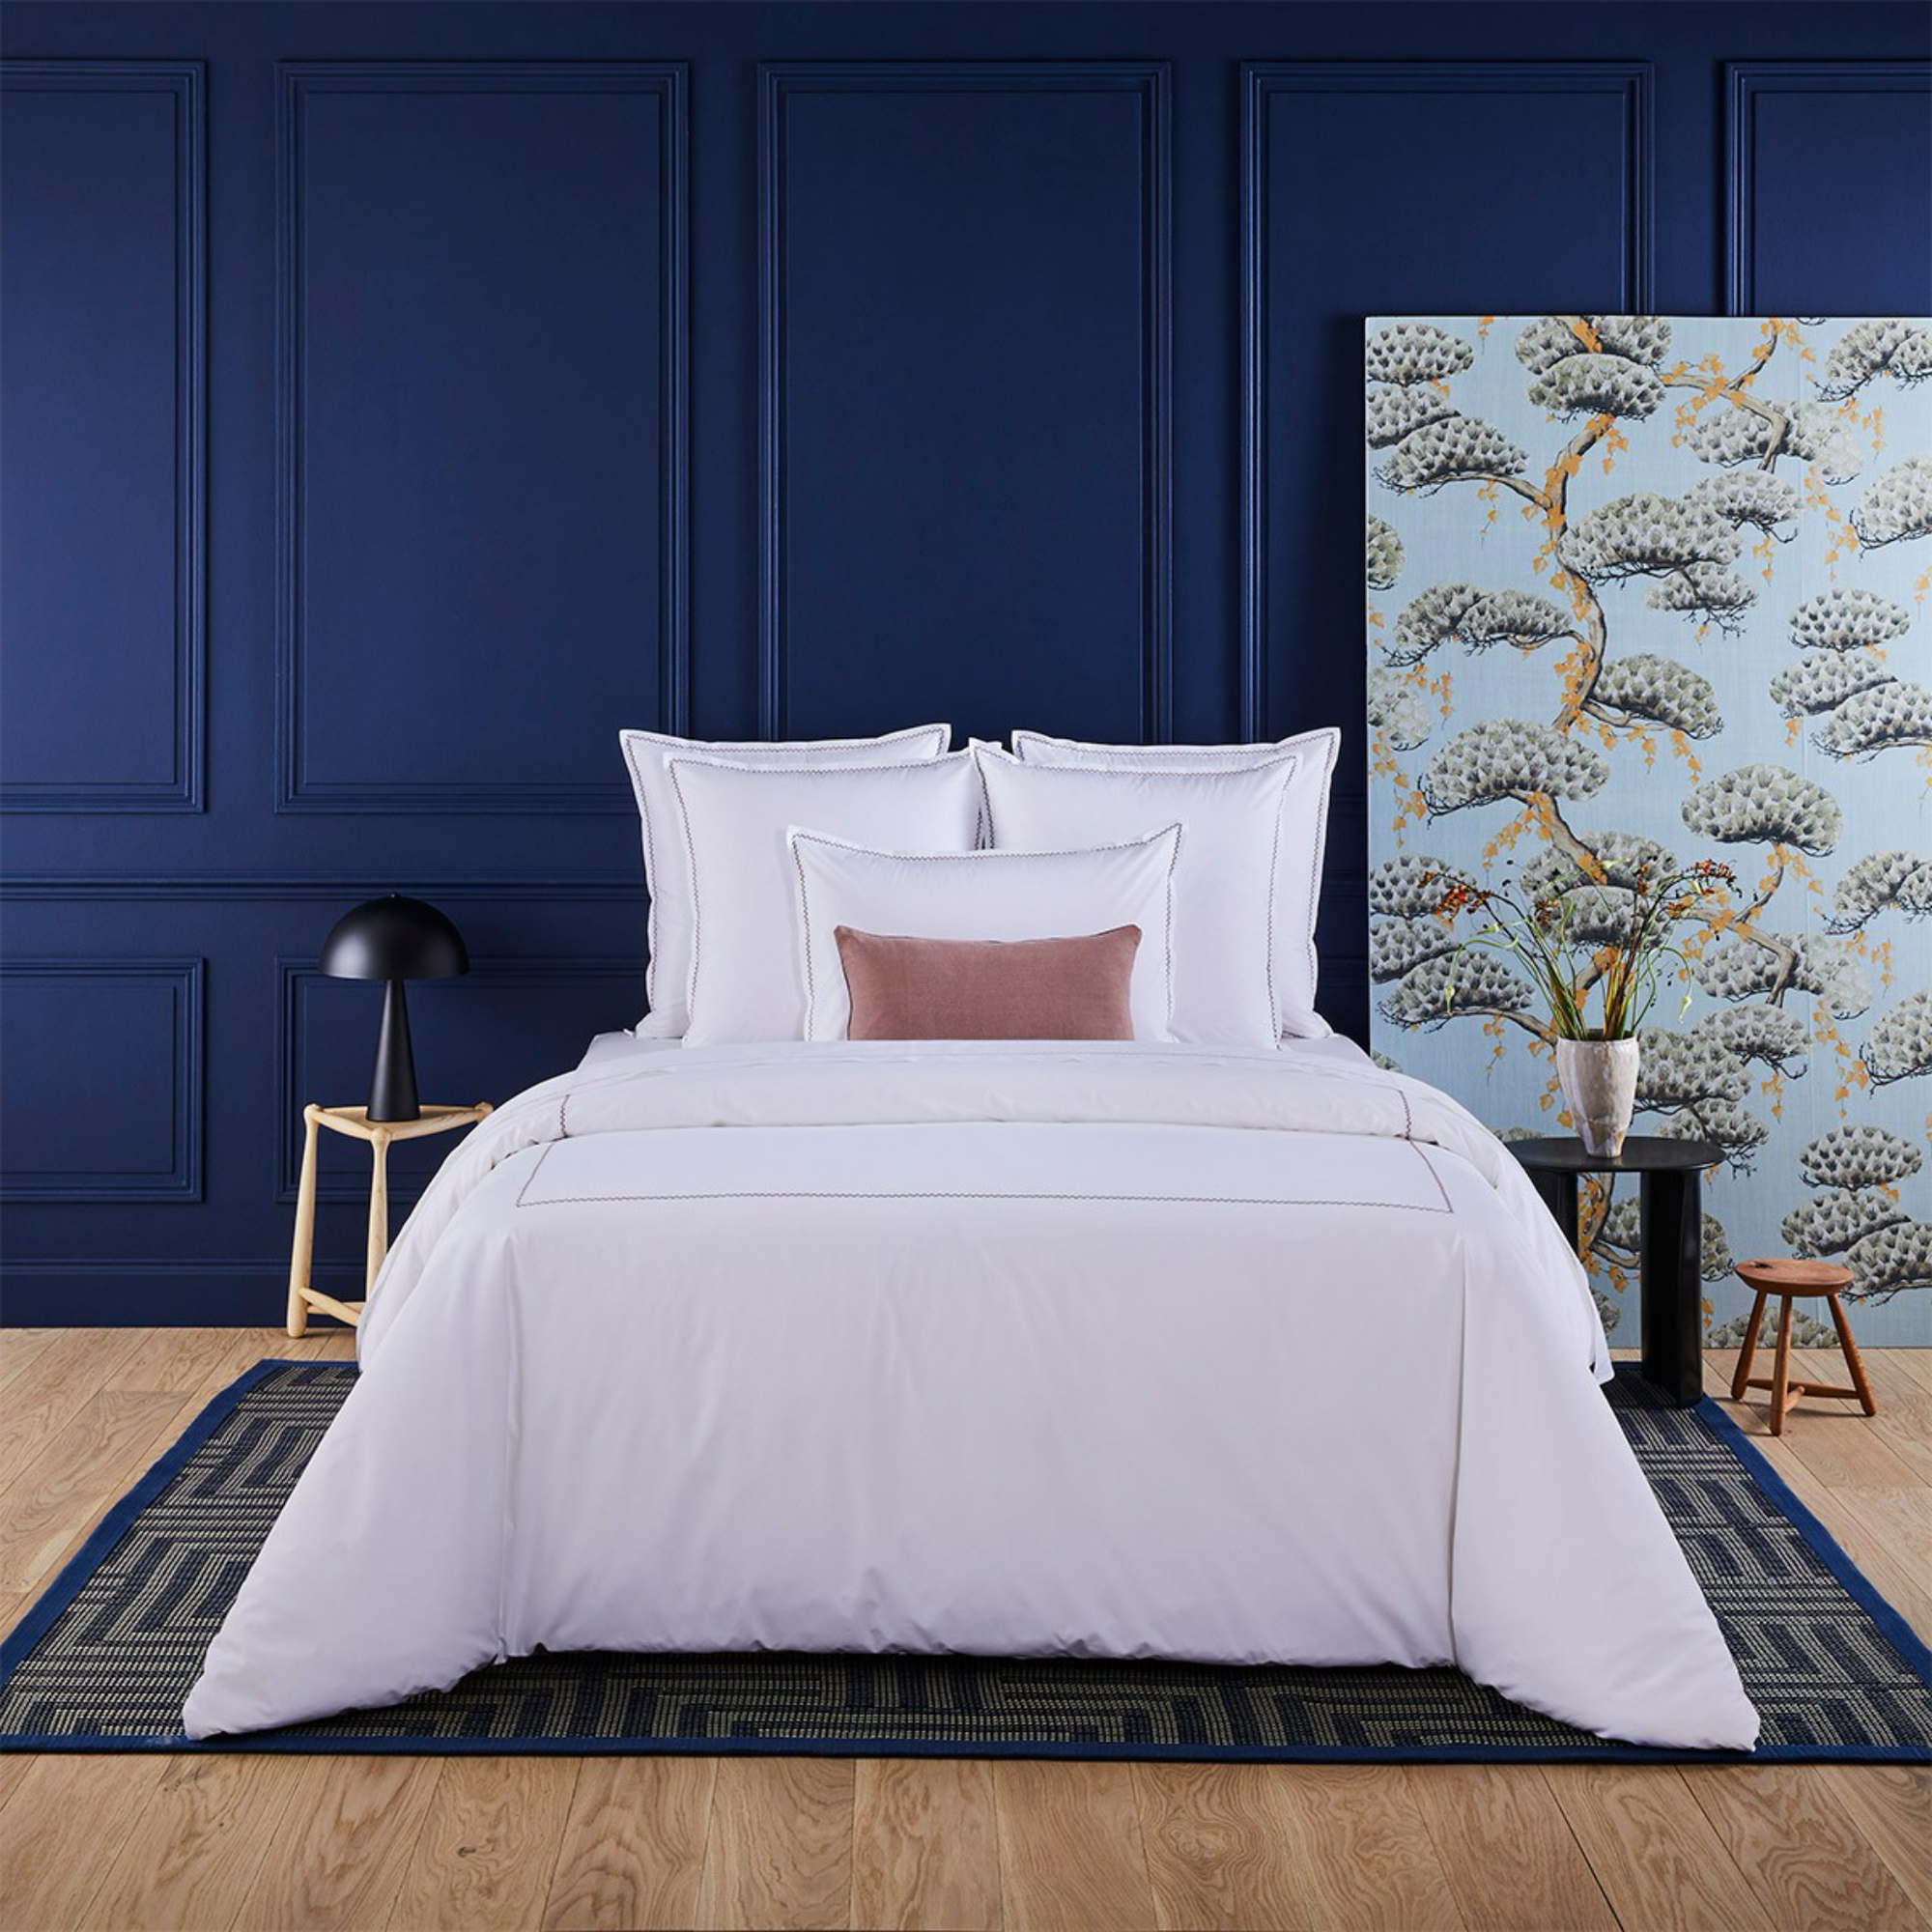 Full Bed Dressed in Yves Delorme Alienor Bedding in Sienna Color